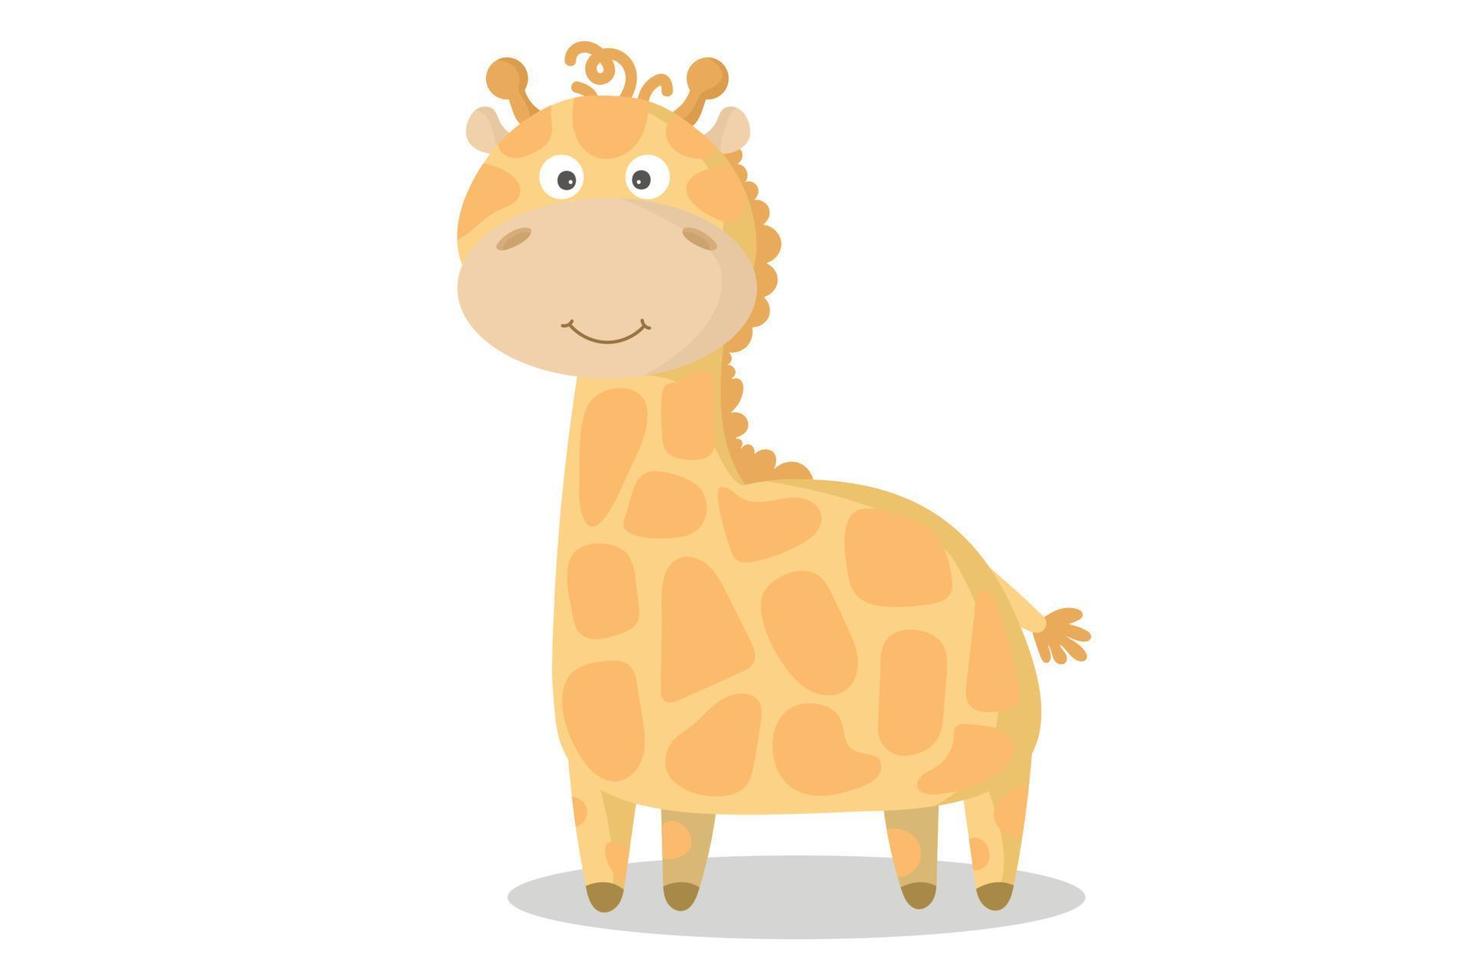 vector cartoon giraf. afrikaans dier. grappige soort giraf. grappige schattige hoornneus. schattig klein Afrikaans dier voor modedruk, kinderkleding, kinderkamer, poster, uitnodiging, wenskaartontwerp